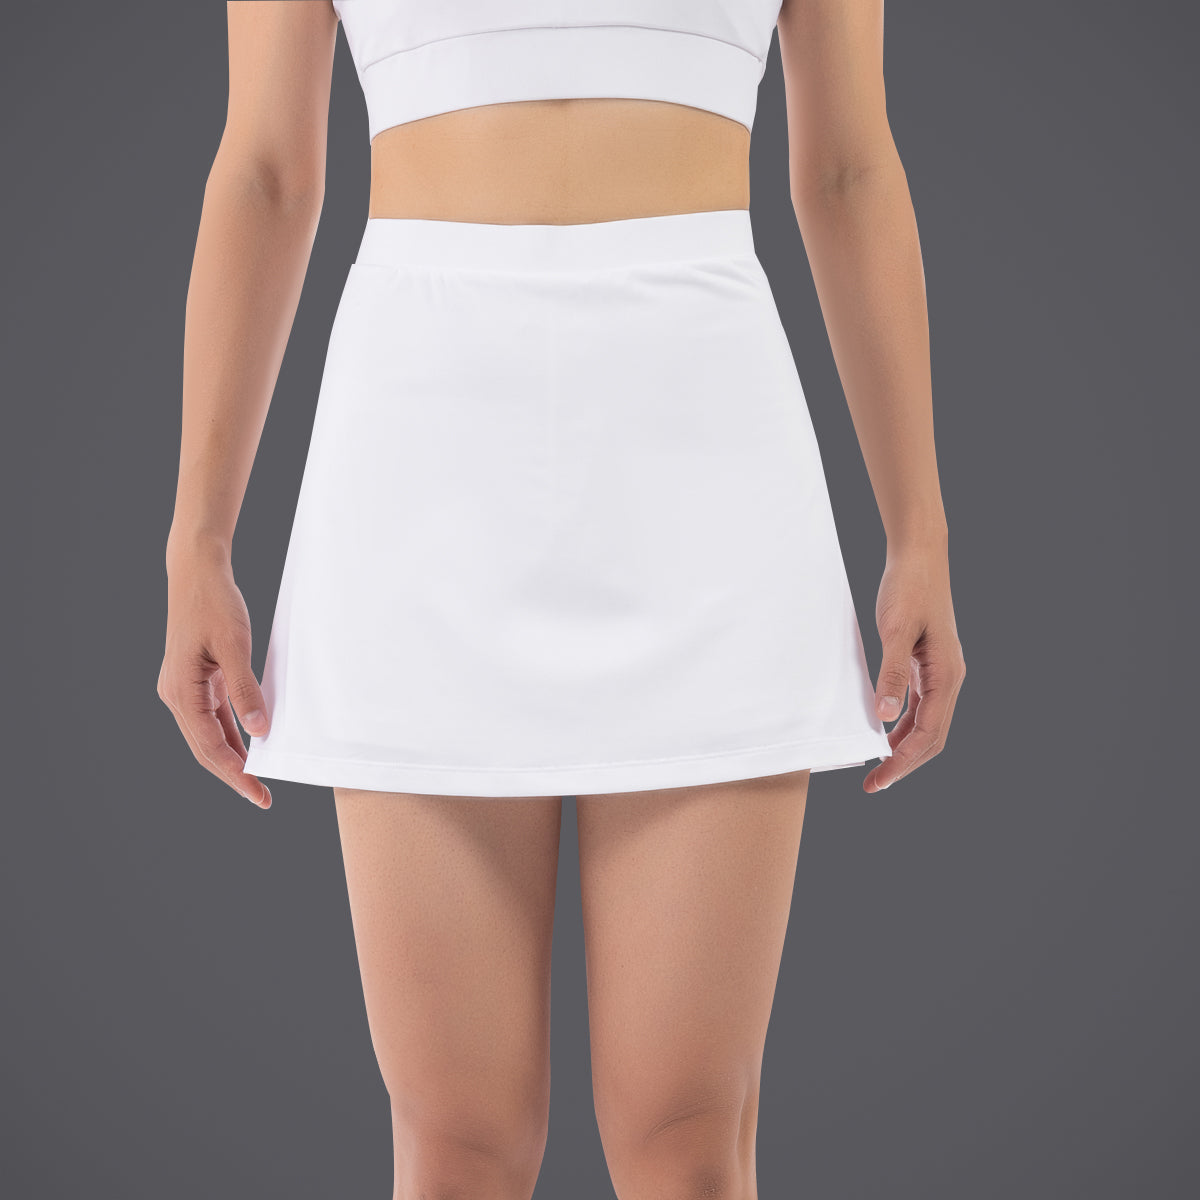 Santic Custom Womens Sports Skirt